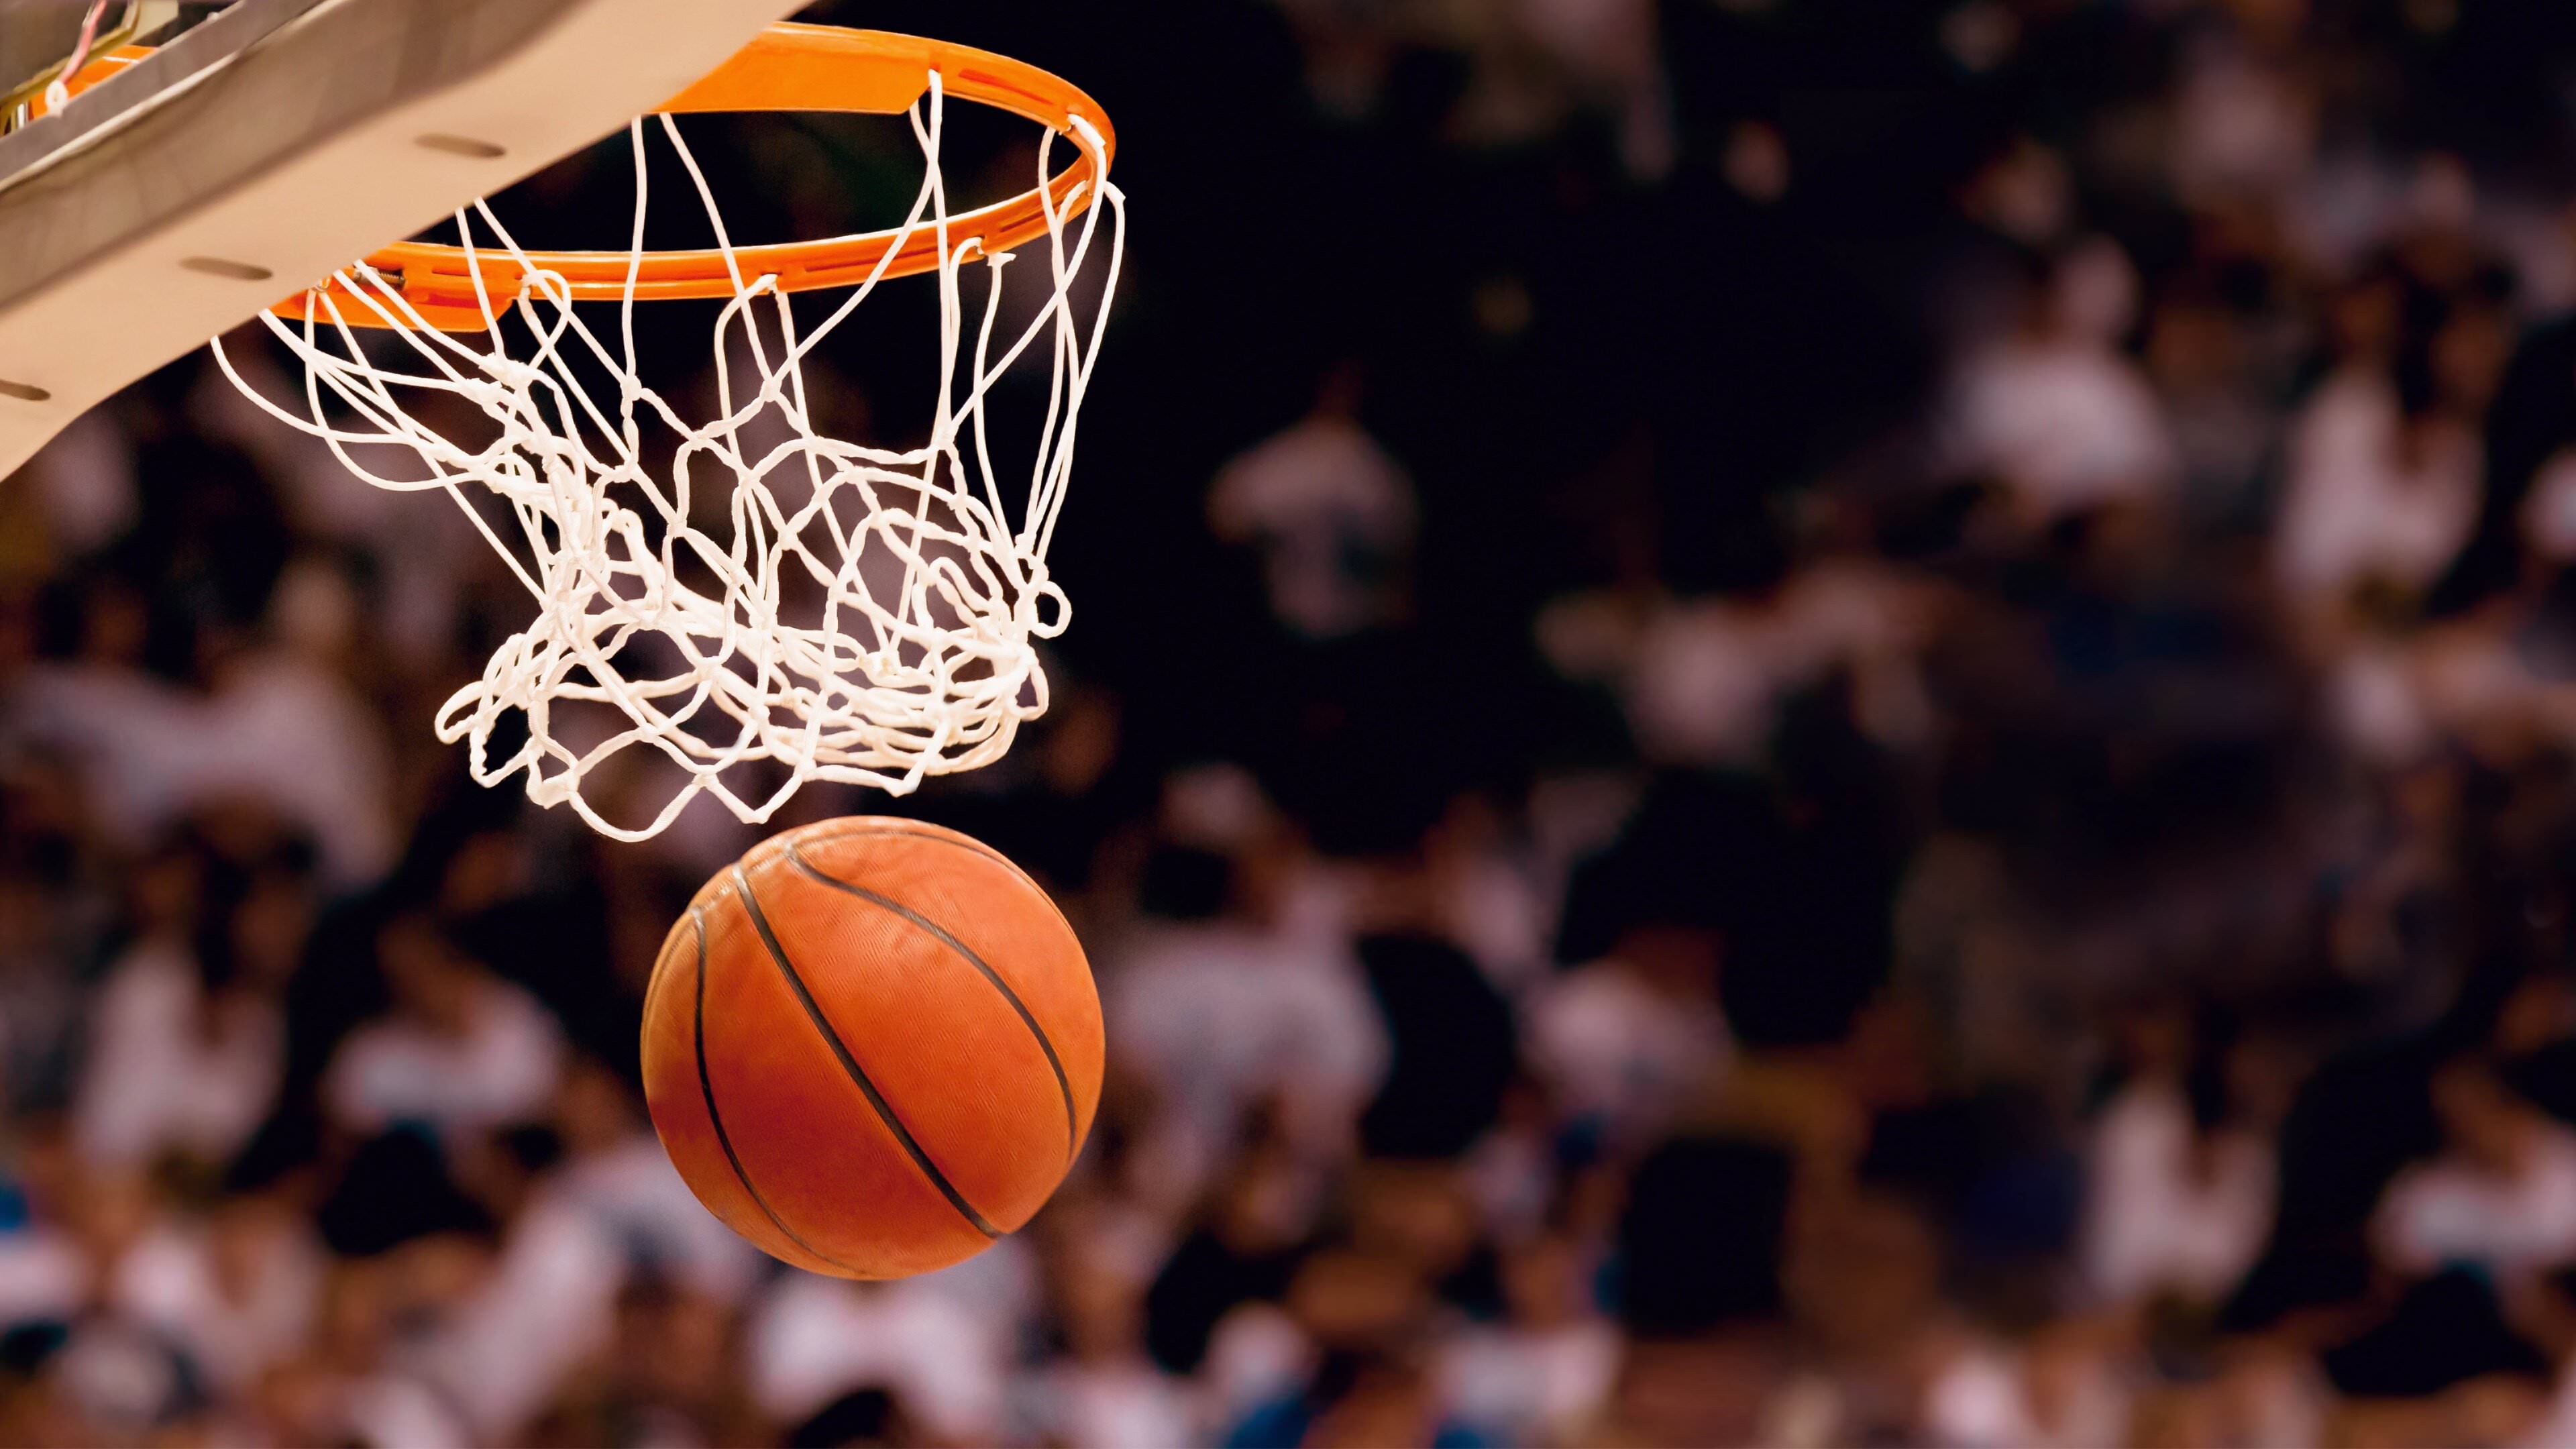 Goal (Sports): Basketball scoring shots, A spherical ball used in basketball games, National Basketball Association. 3840x2160 4K Wallpaper.